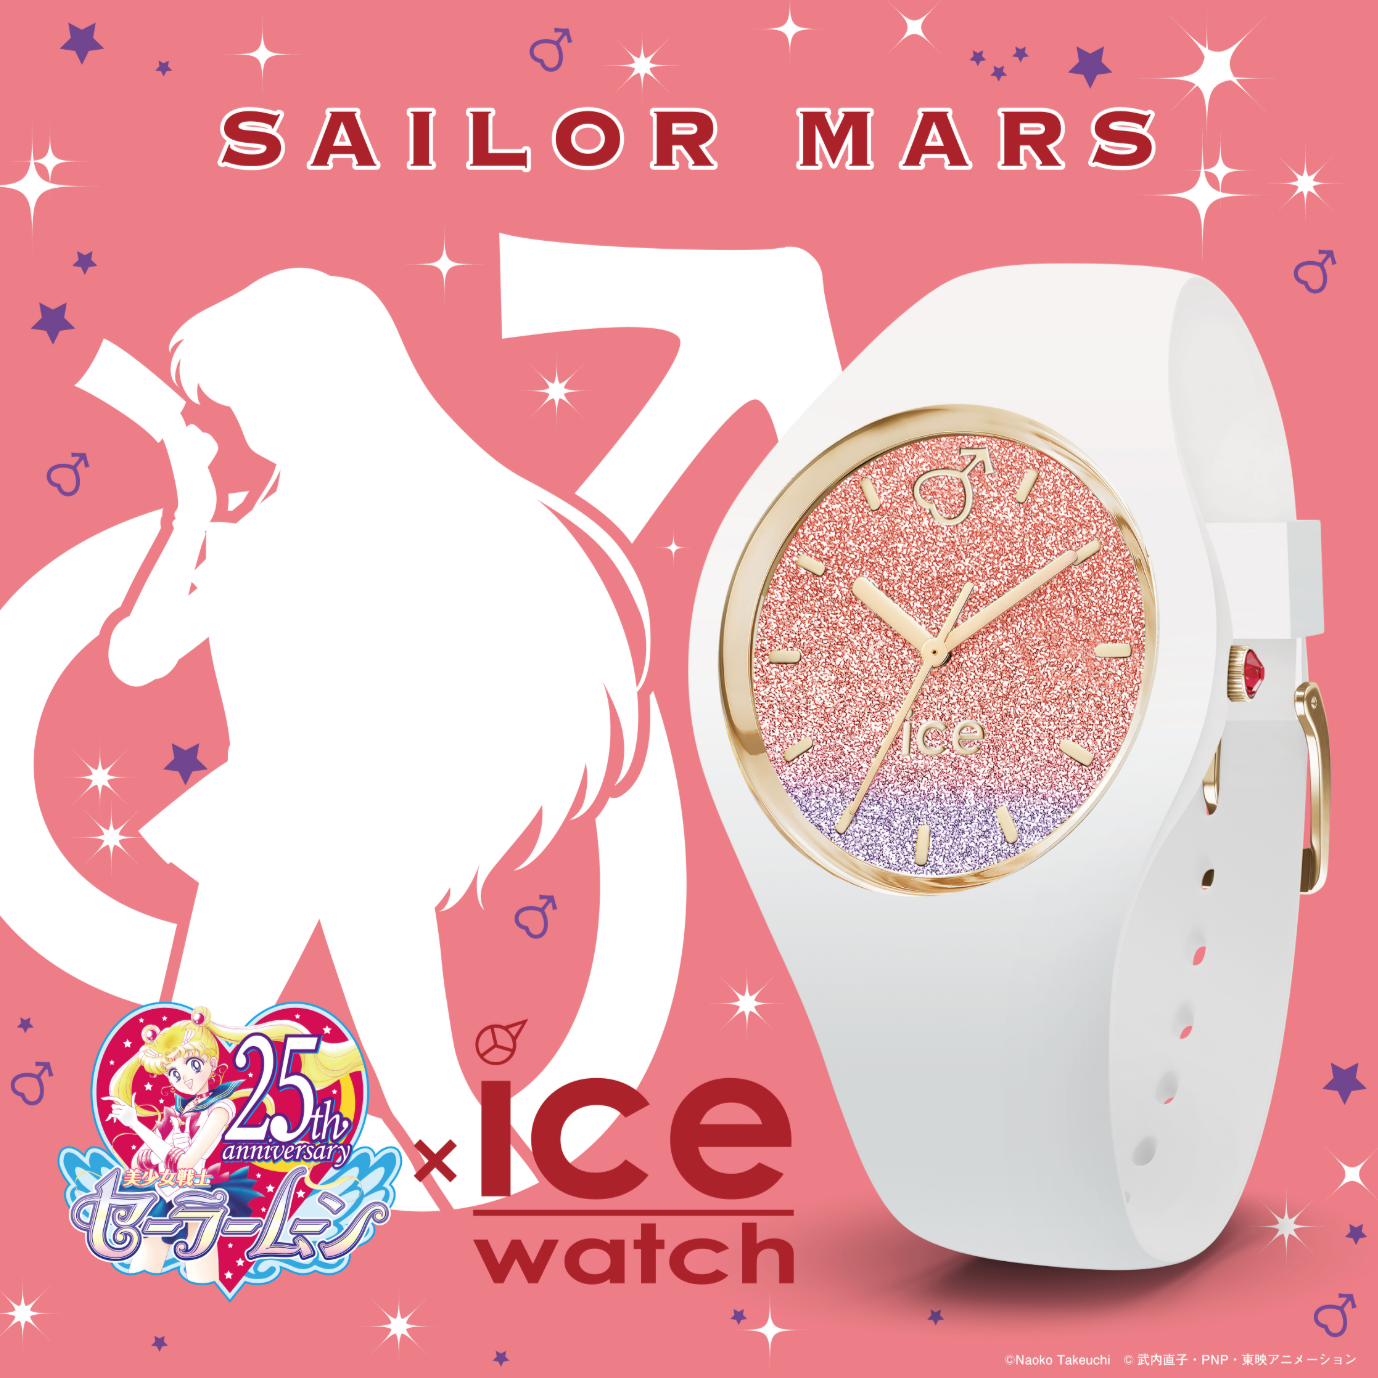 Sailor Moon Ice Watch Collaboration - Sailor Mars